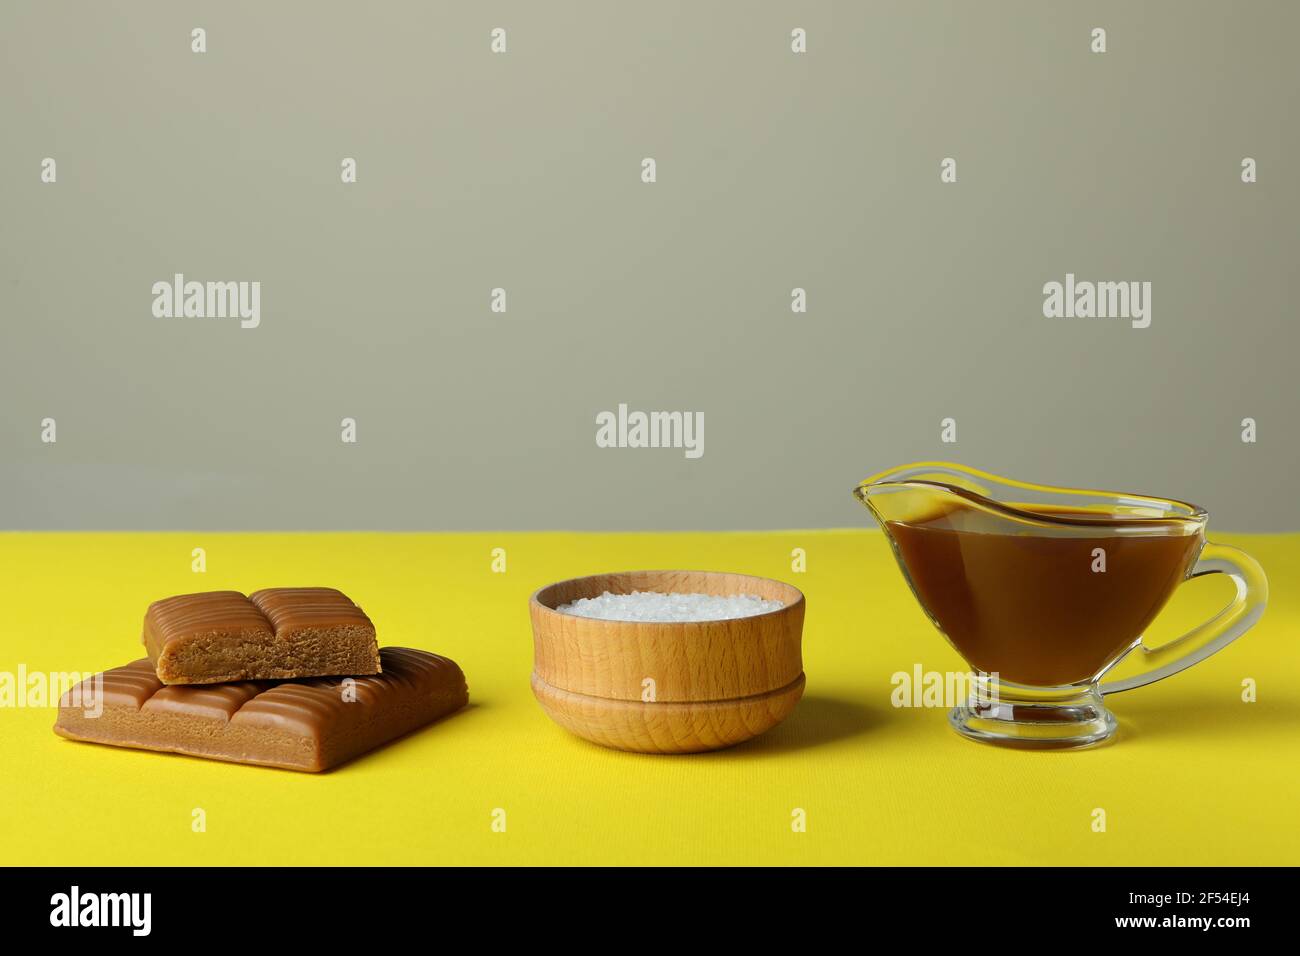 Caramel pieces, sauce and bowl of salt on yellow table Stock Photo